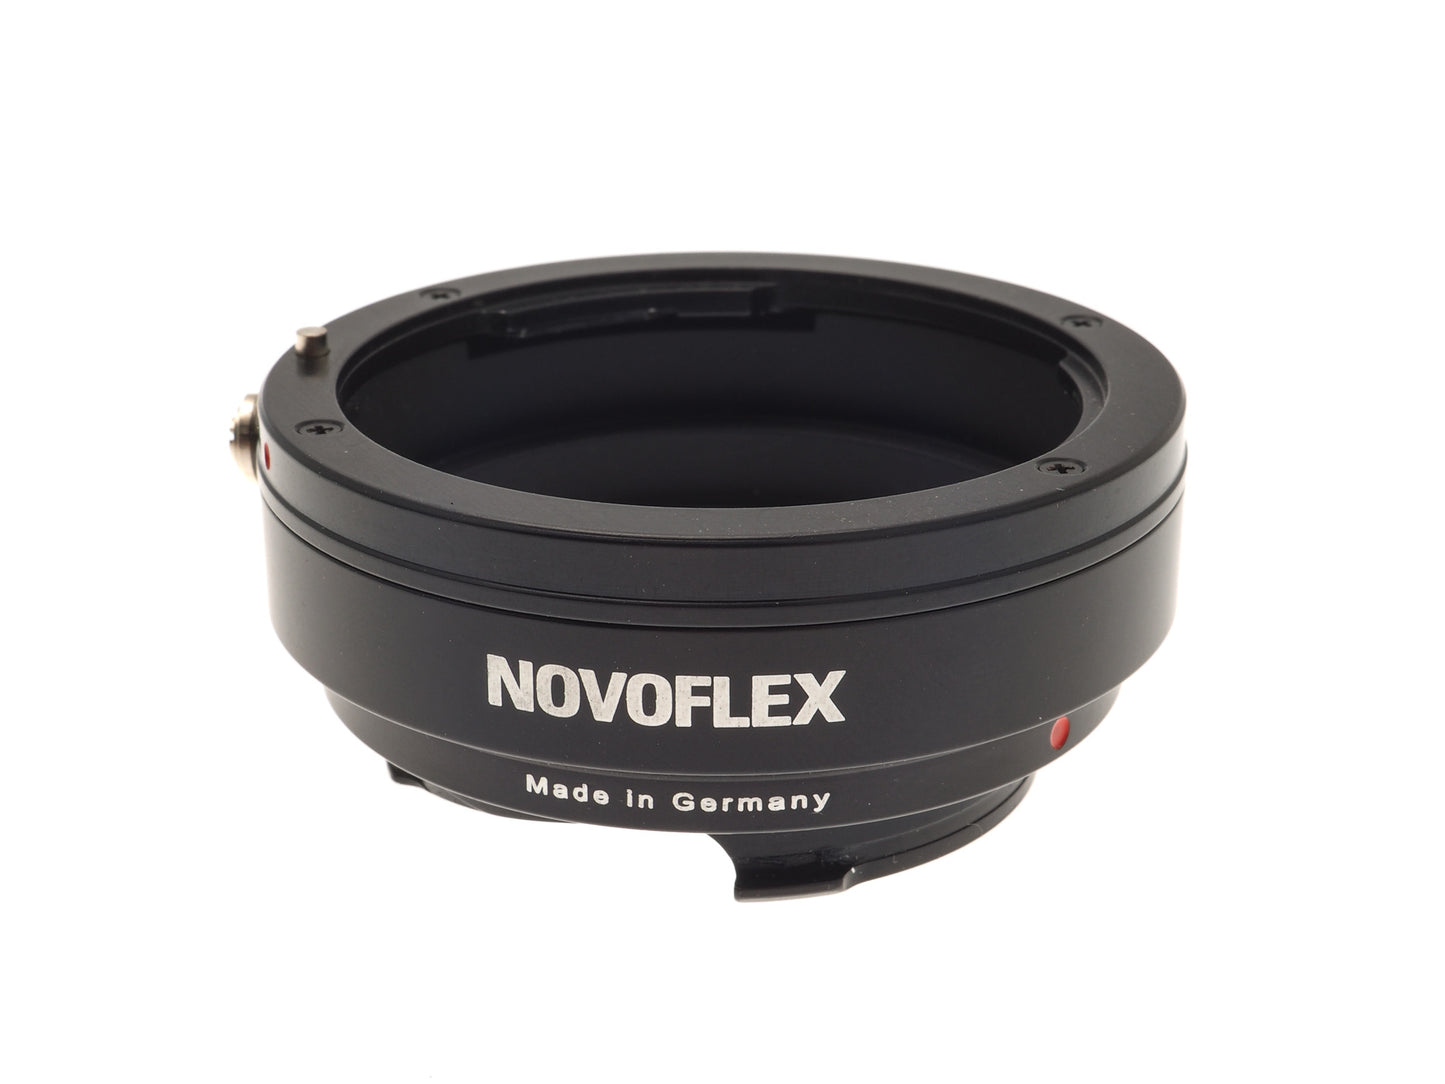 Novoflex Nikon F - Leica M Adapter - Lens Adapter